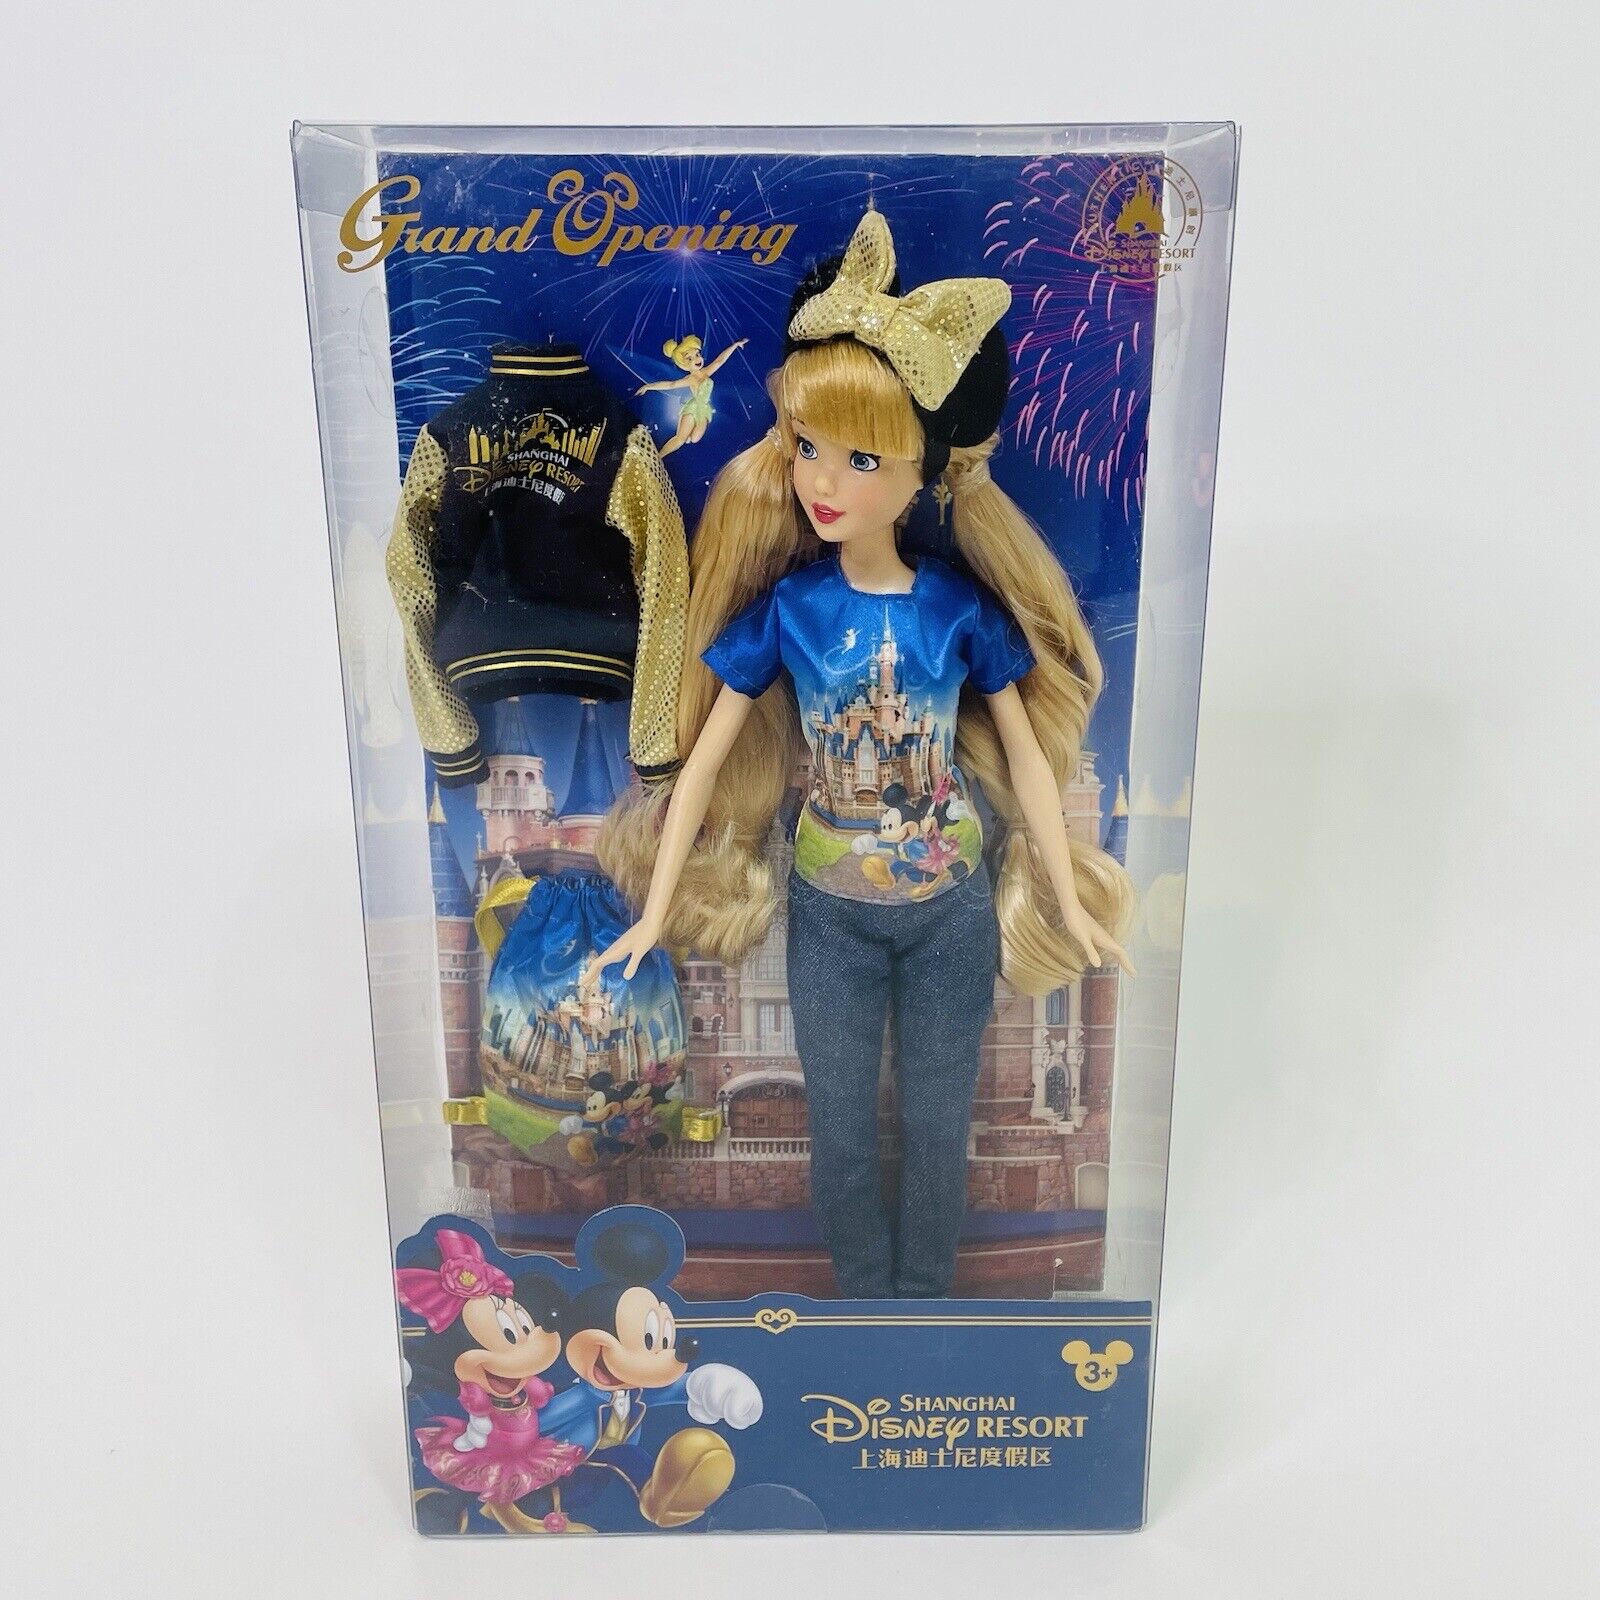 Disney Shanghai Grand Opening 12 Inch Doll 2016 Rare New In Box Diamond